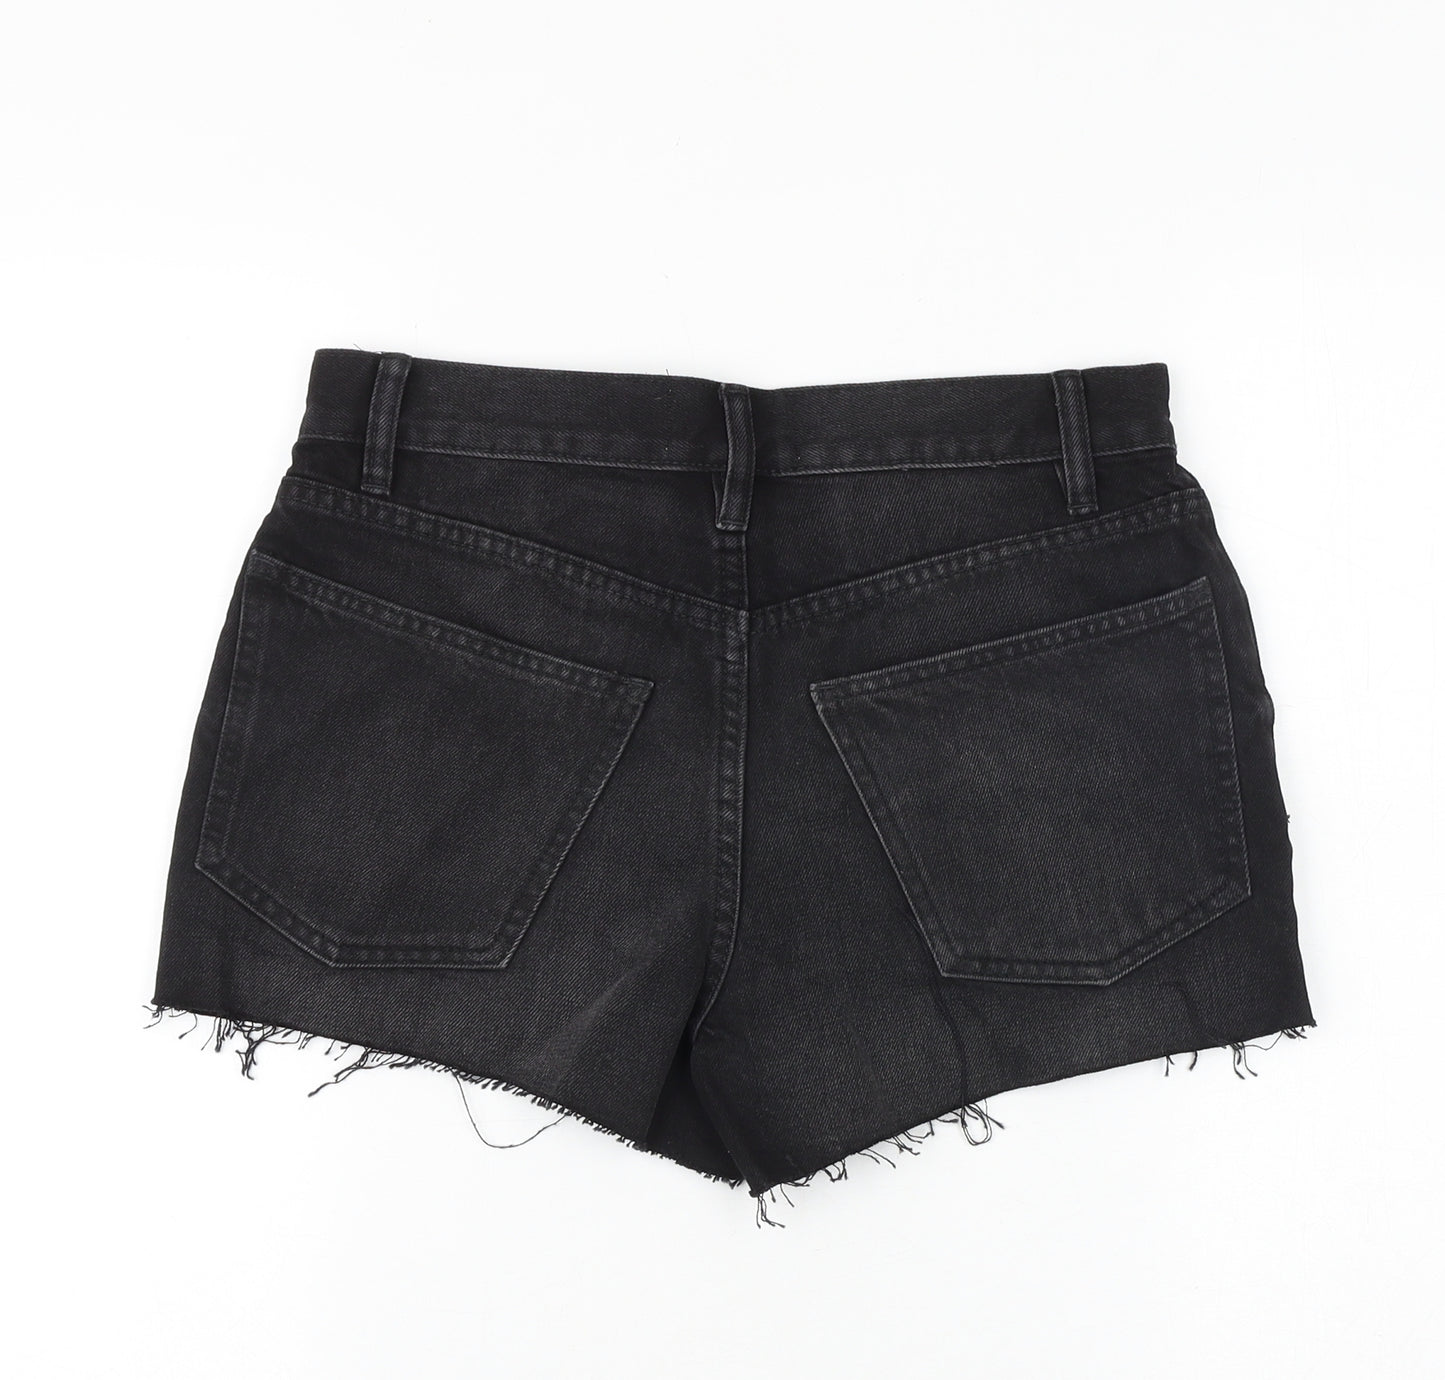 ASOS Womens Black Cotton Hot Pants Shorts Size 6 Regular Zip